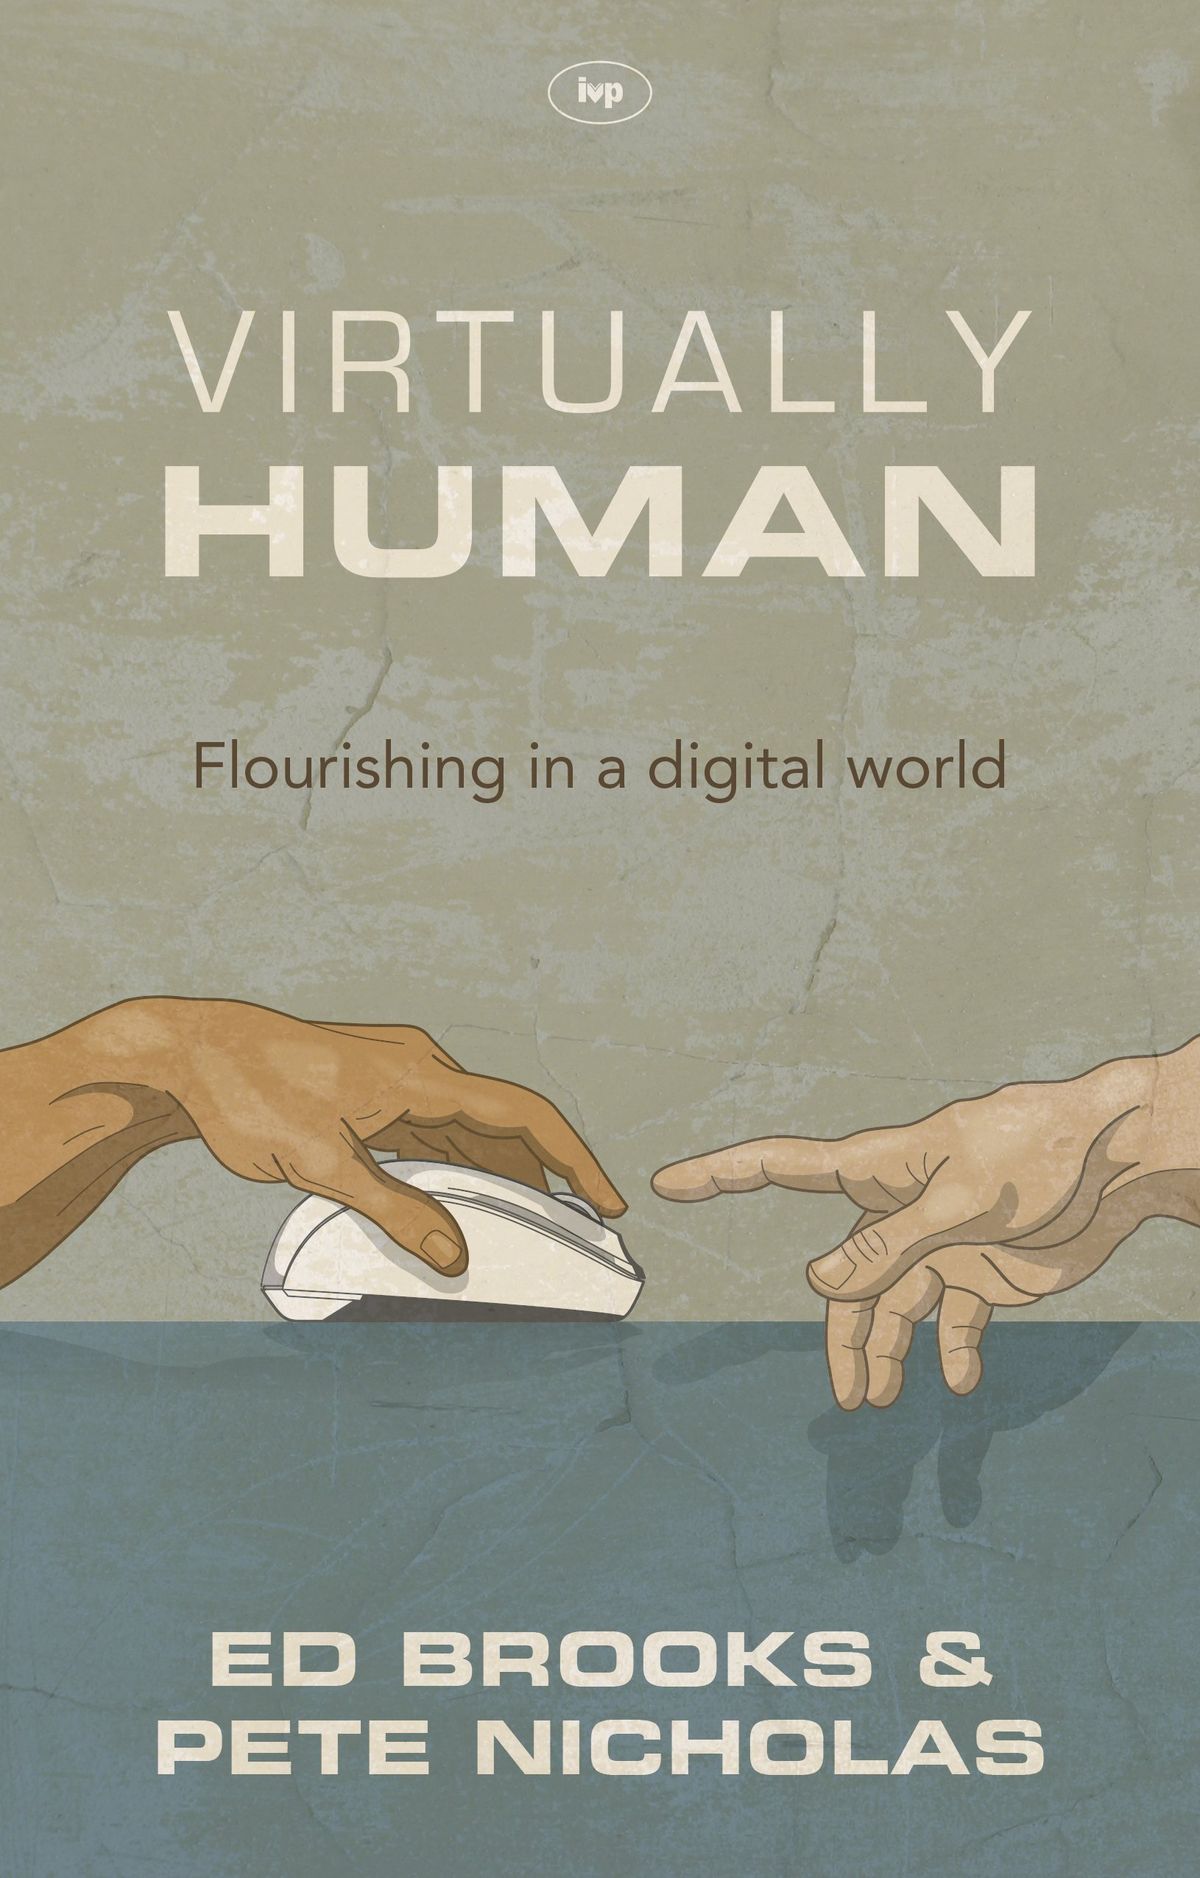 Virtually Human by Ed Brooks & Pete Nicholas – A Review